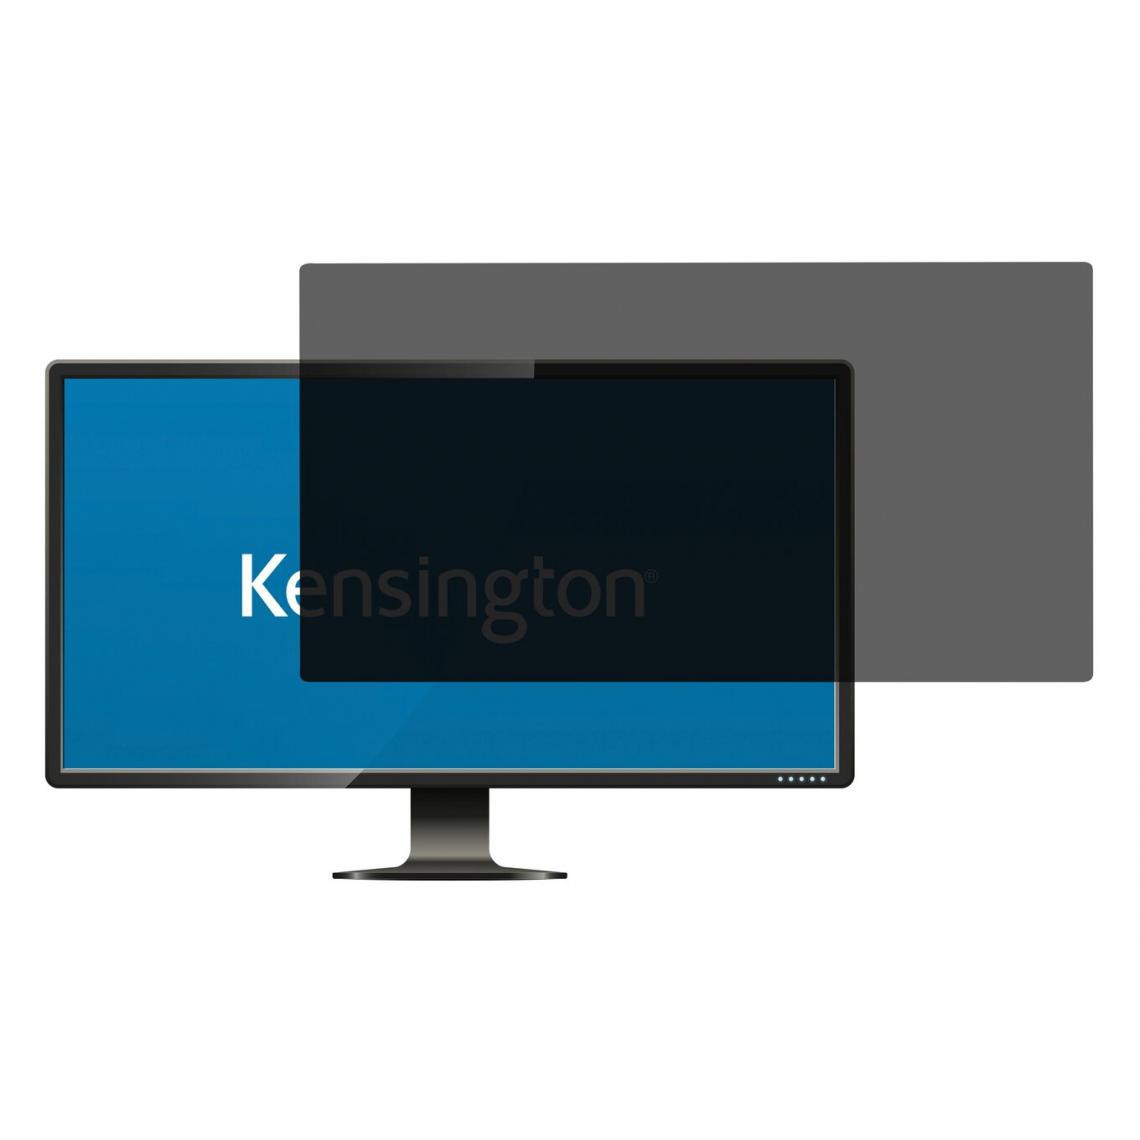 Kensington - KENSINGTON PRIVACY PLG 19IN WIDE 16:10 - Moniteur PC